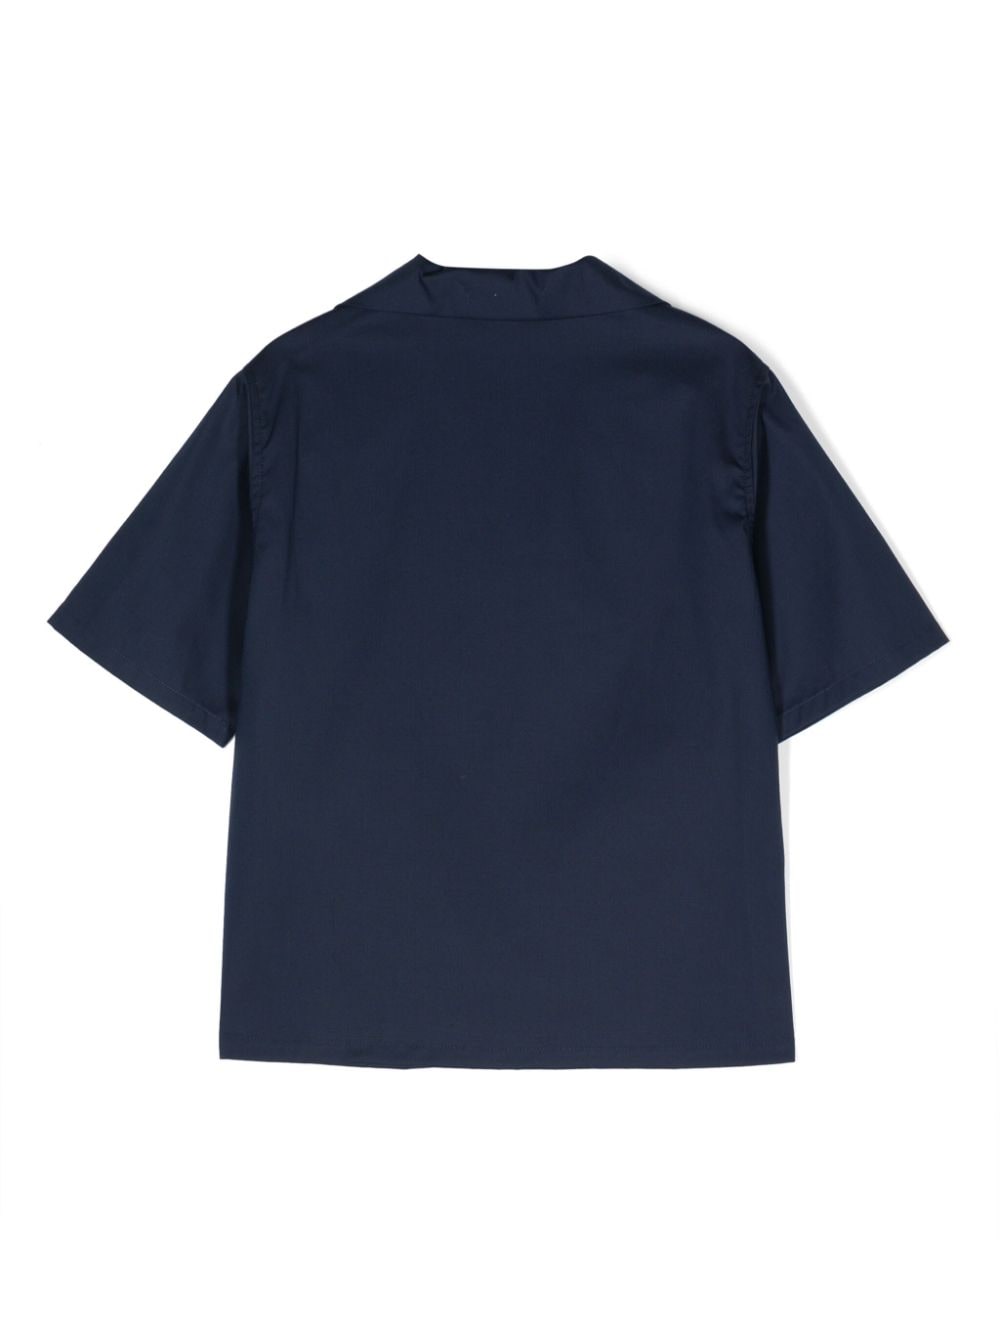 Camicia blu per bambina con logo